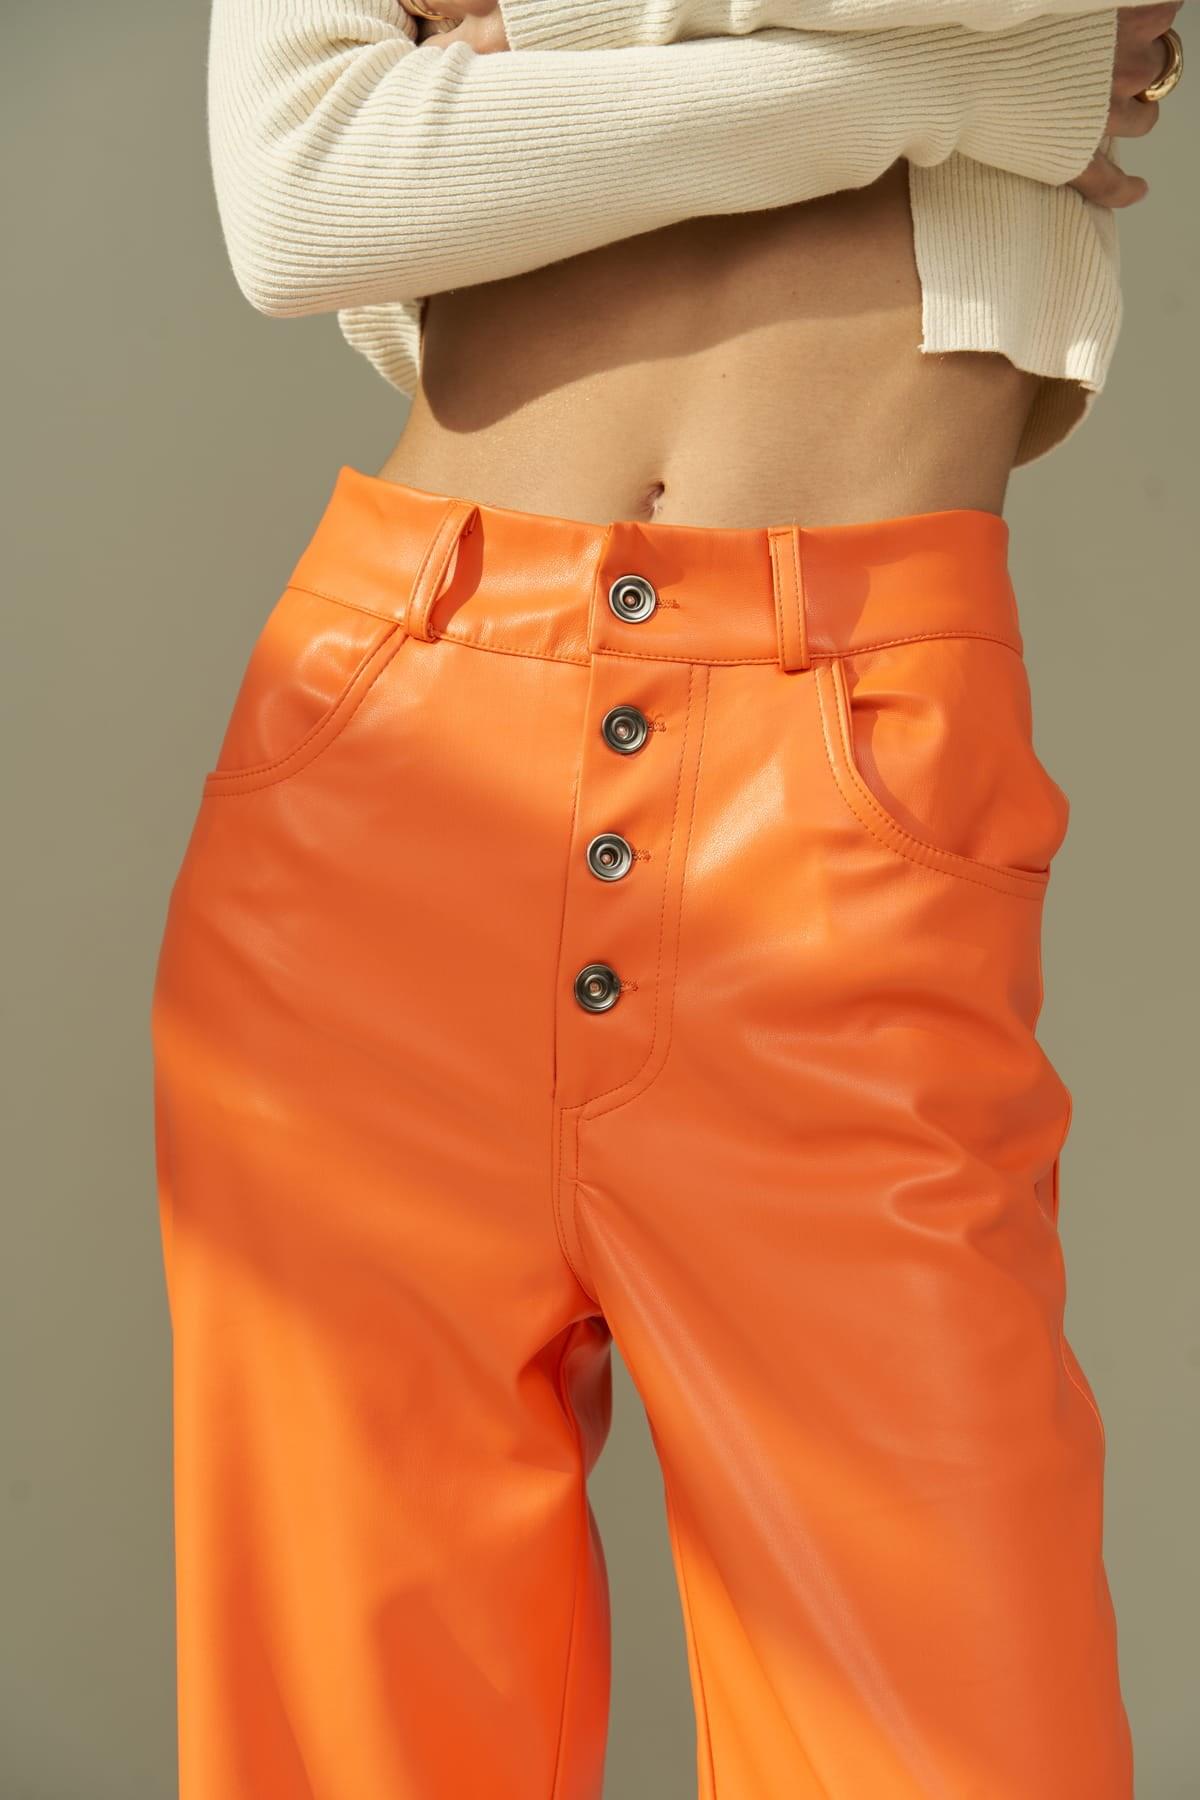 Scott Orange Leather Pants